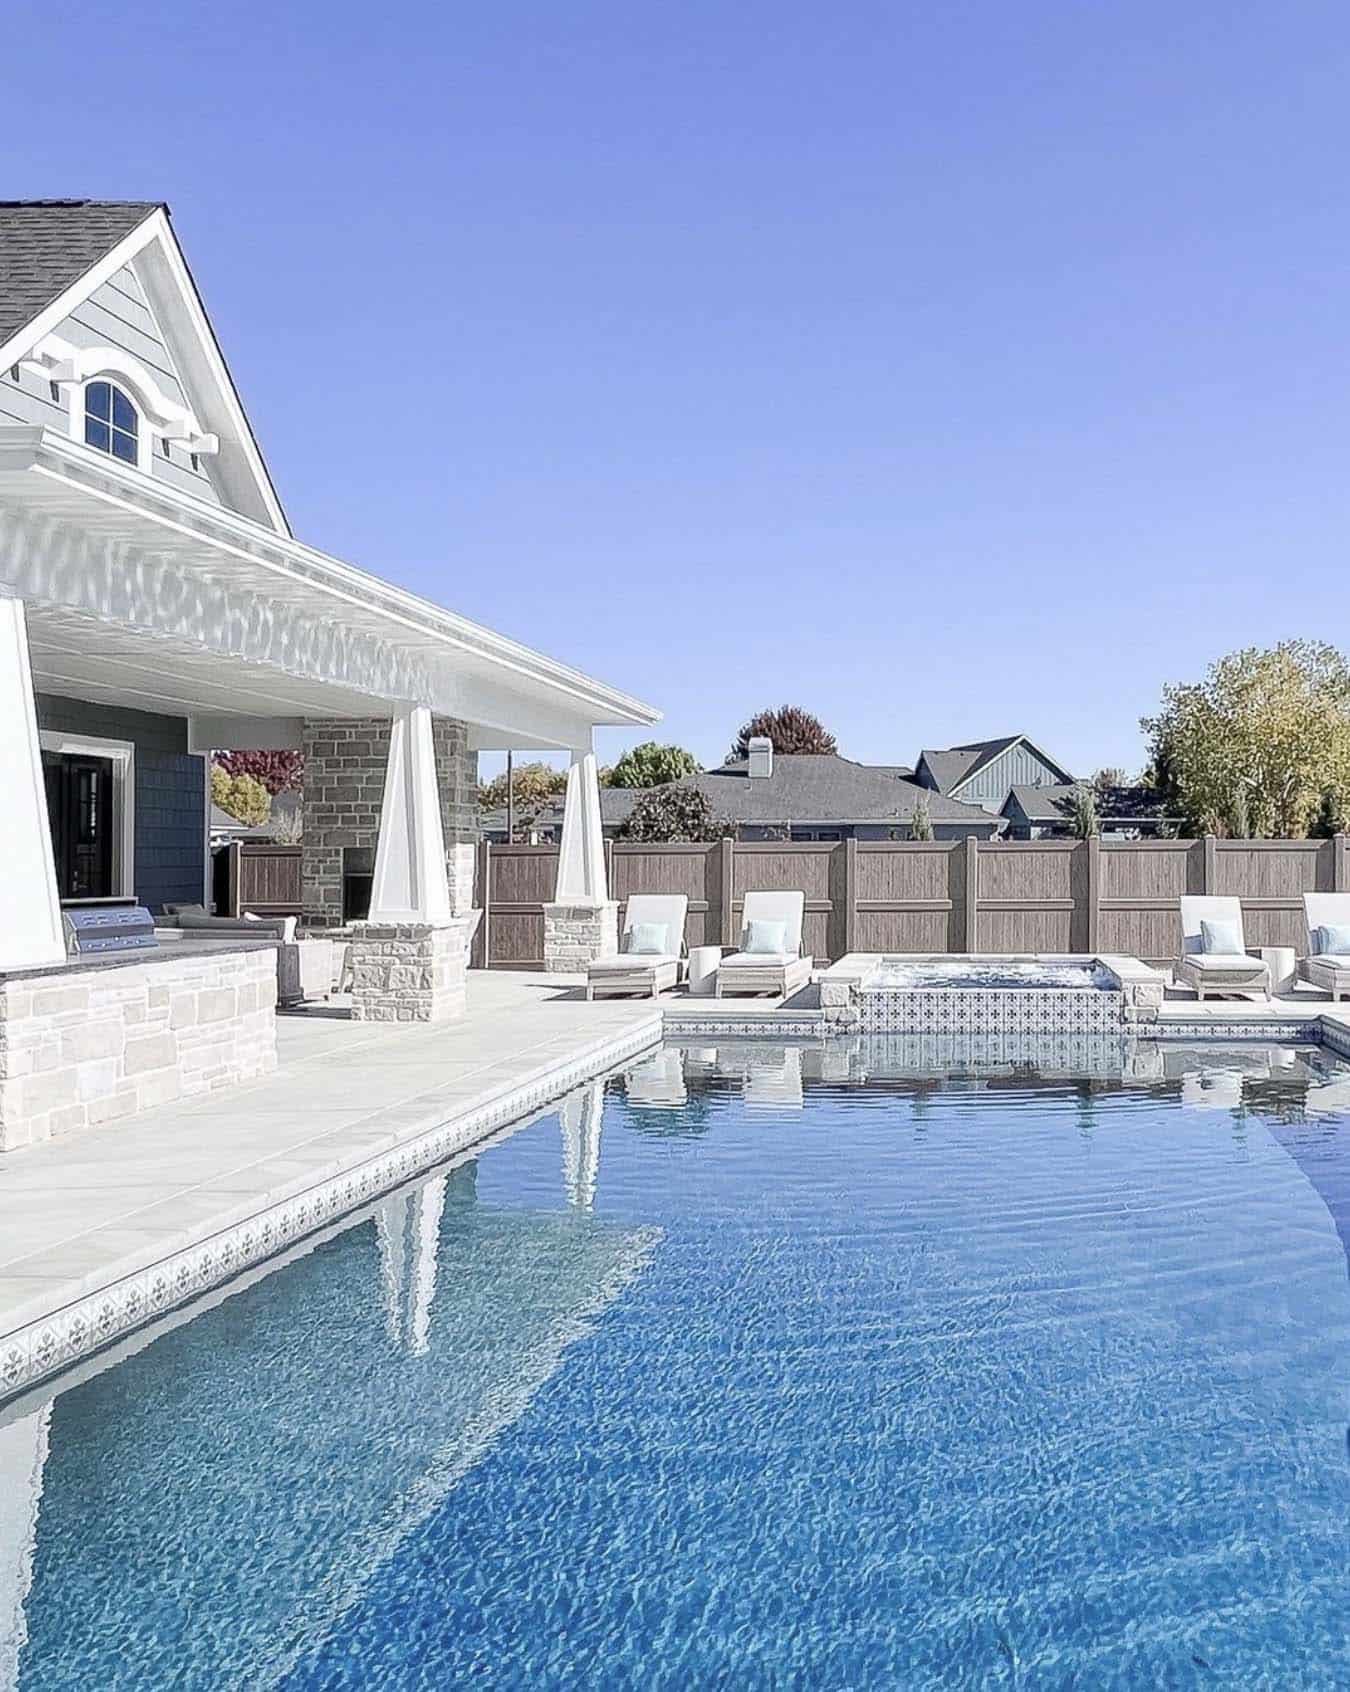 coastal-craftsman-style-home-backyard-with-a-pool